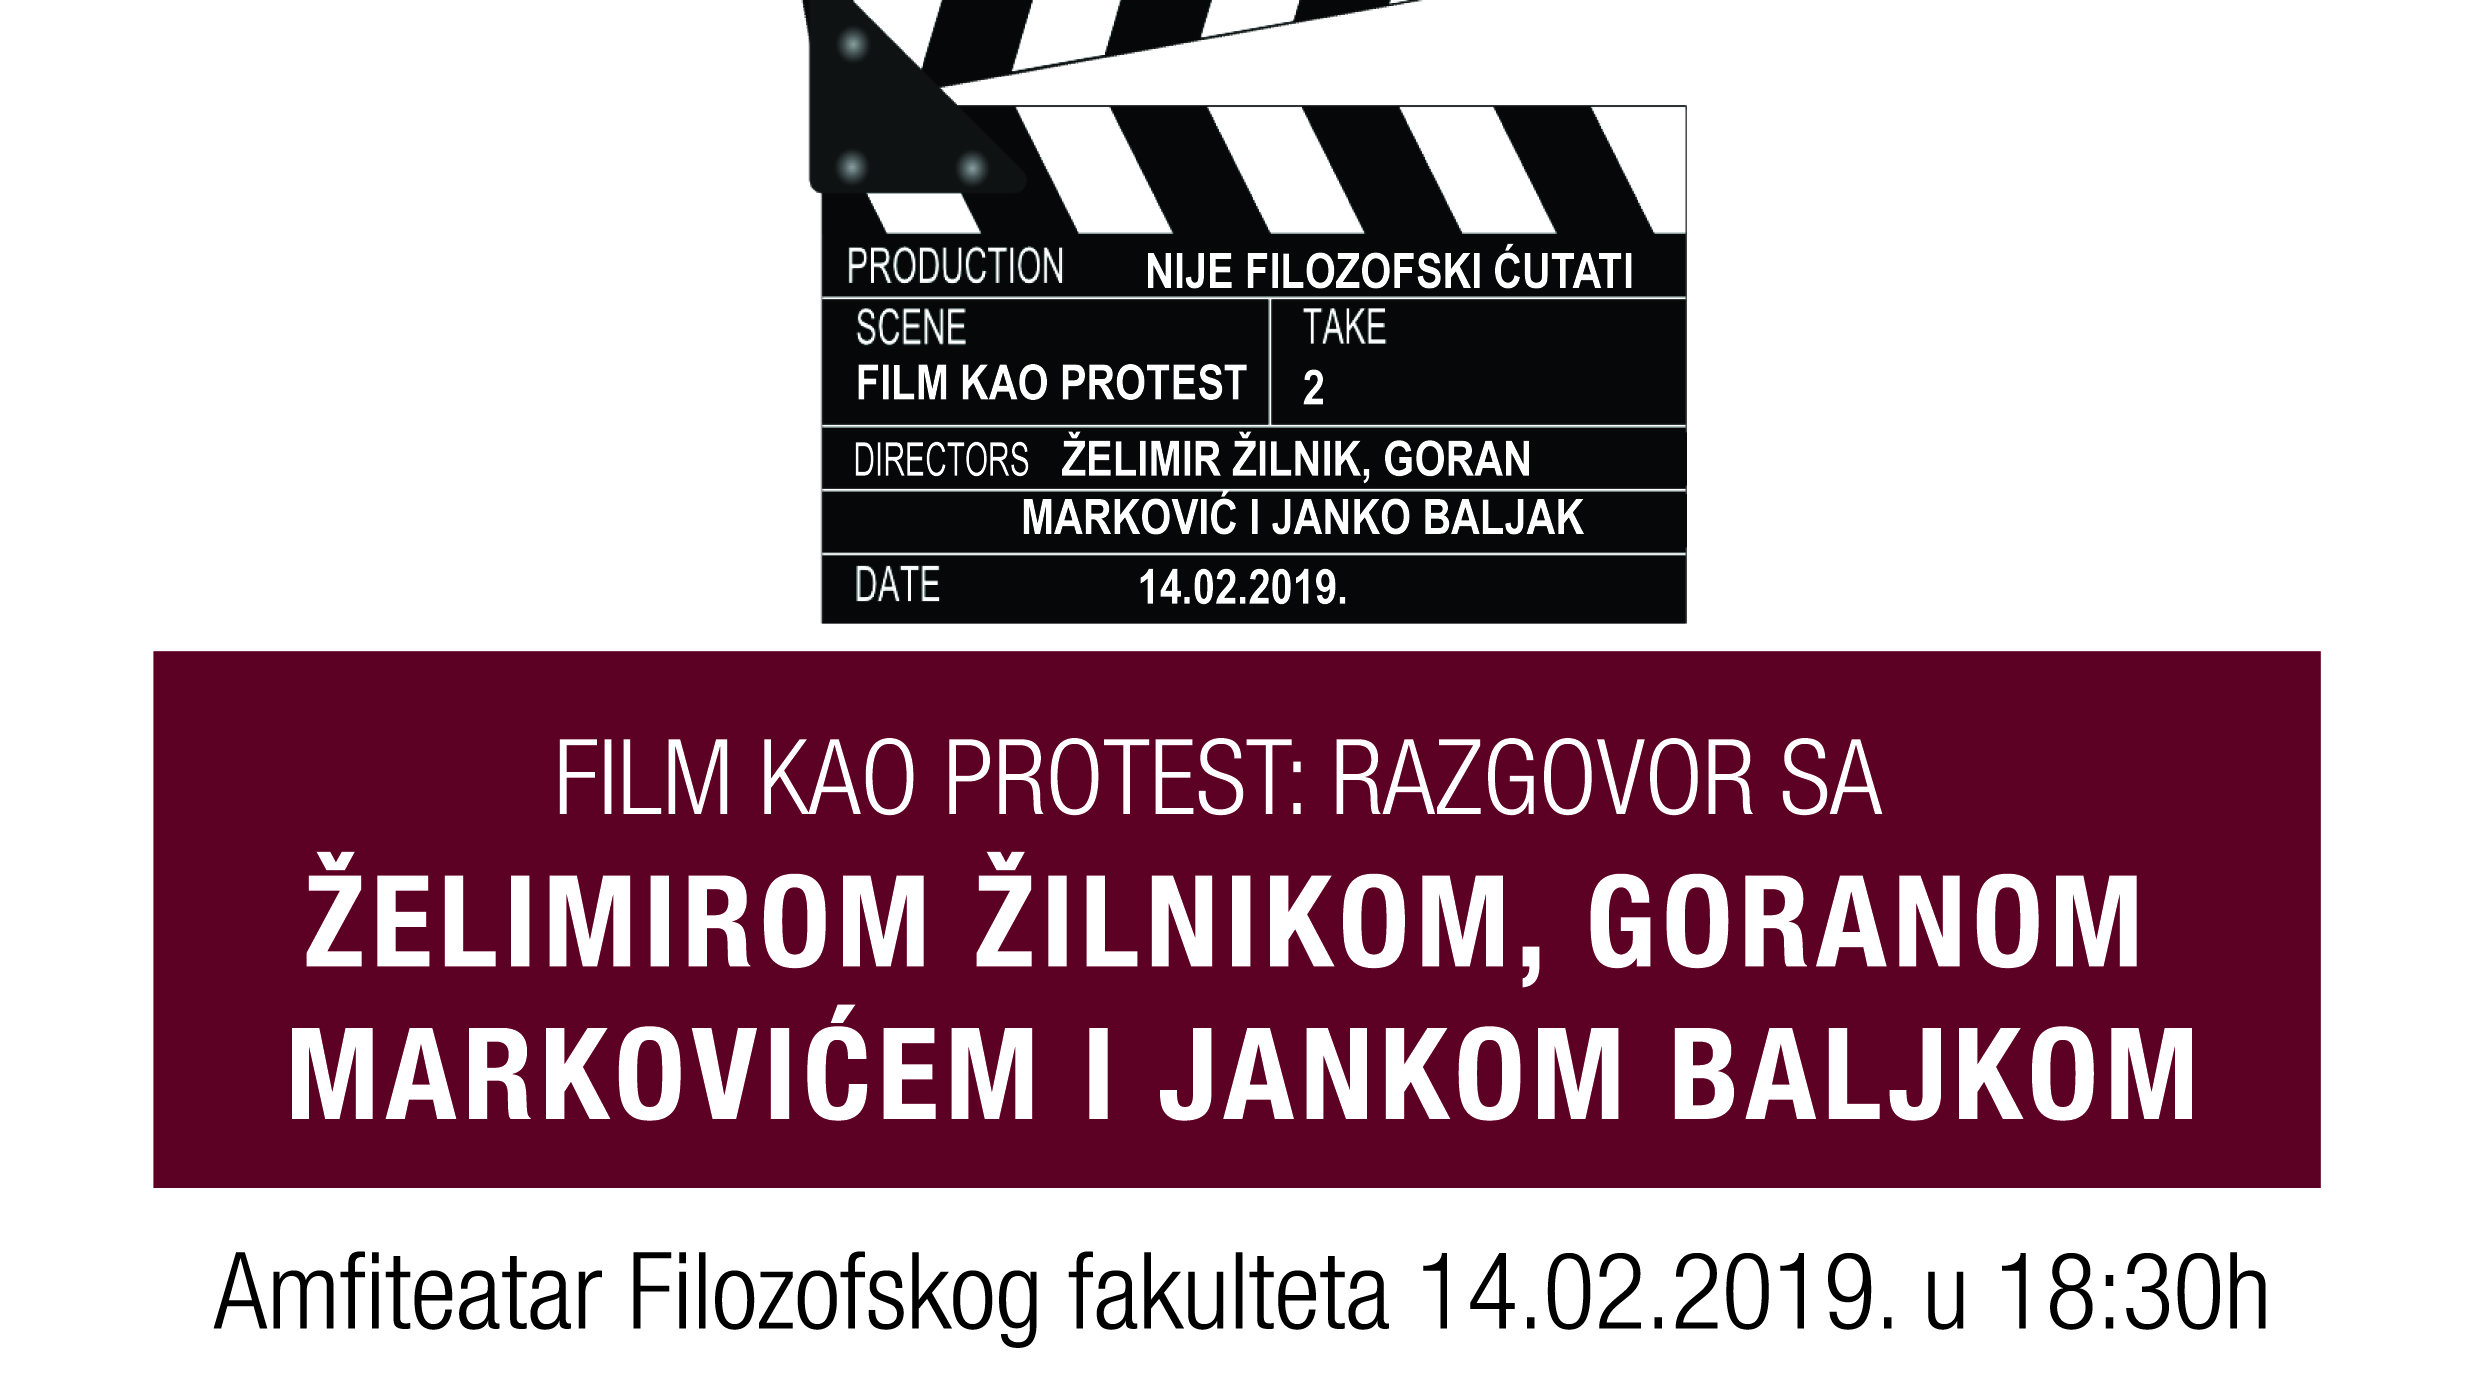 Tribina "Film kao protest" 14. februara na Filozofskom fakultetu 1